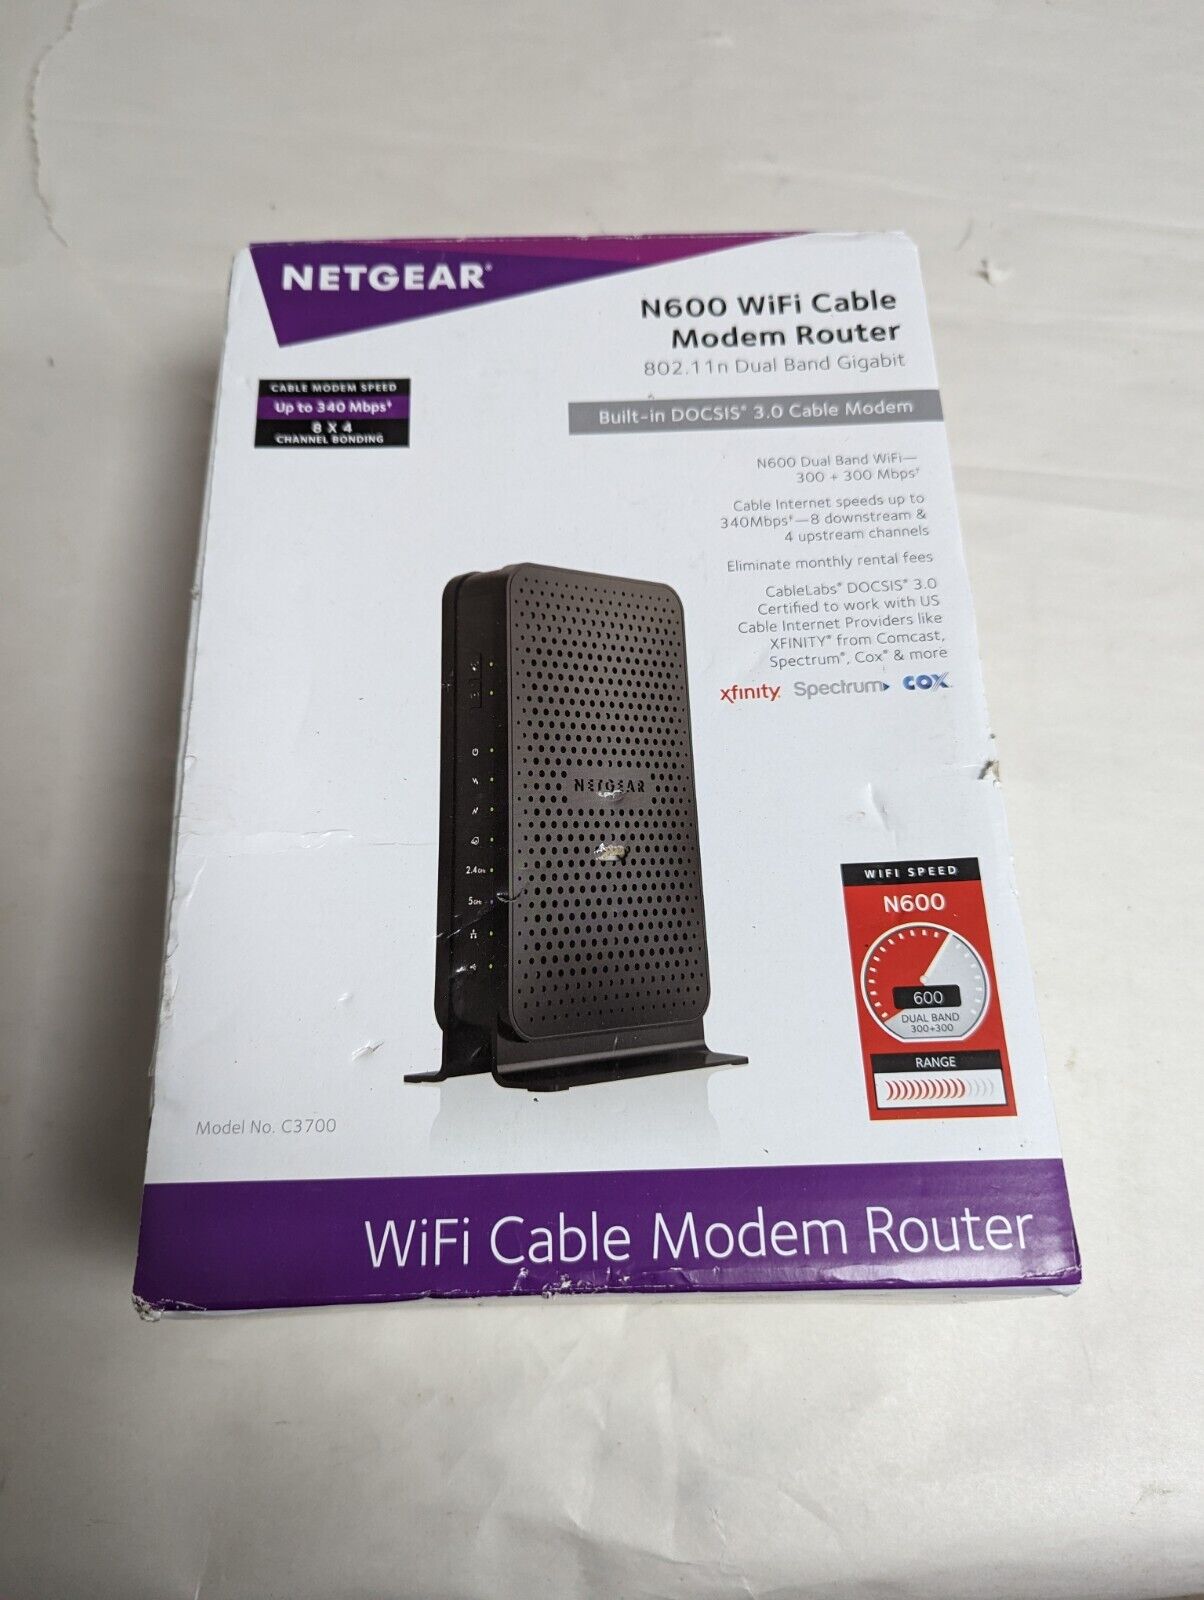 Netgear C3700 N600 Dual Band Gigabit Wi-Fi Cable Modem Router NEW